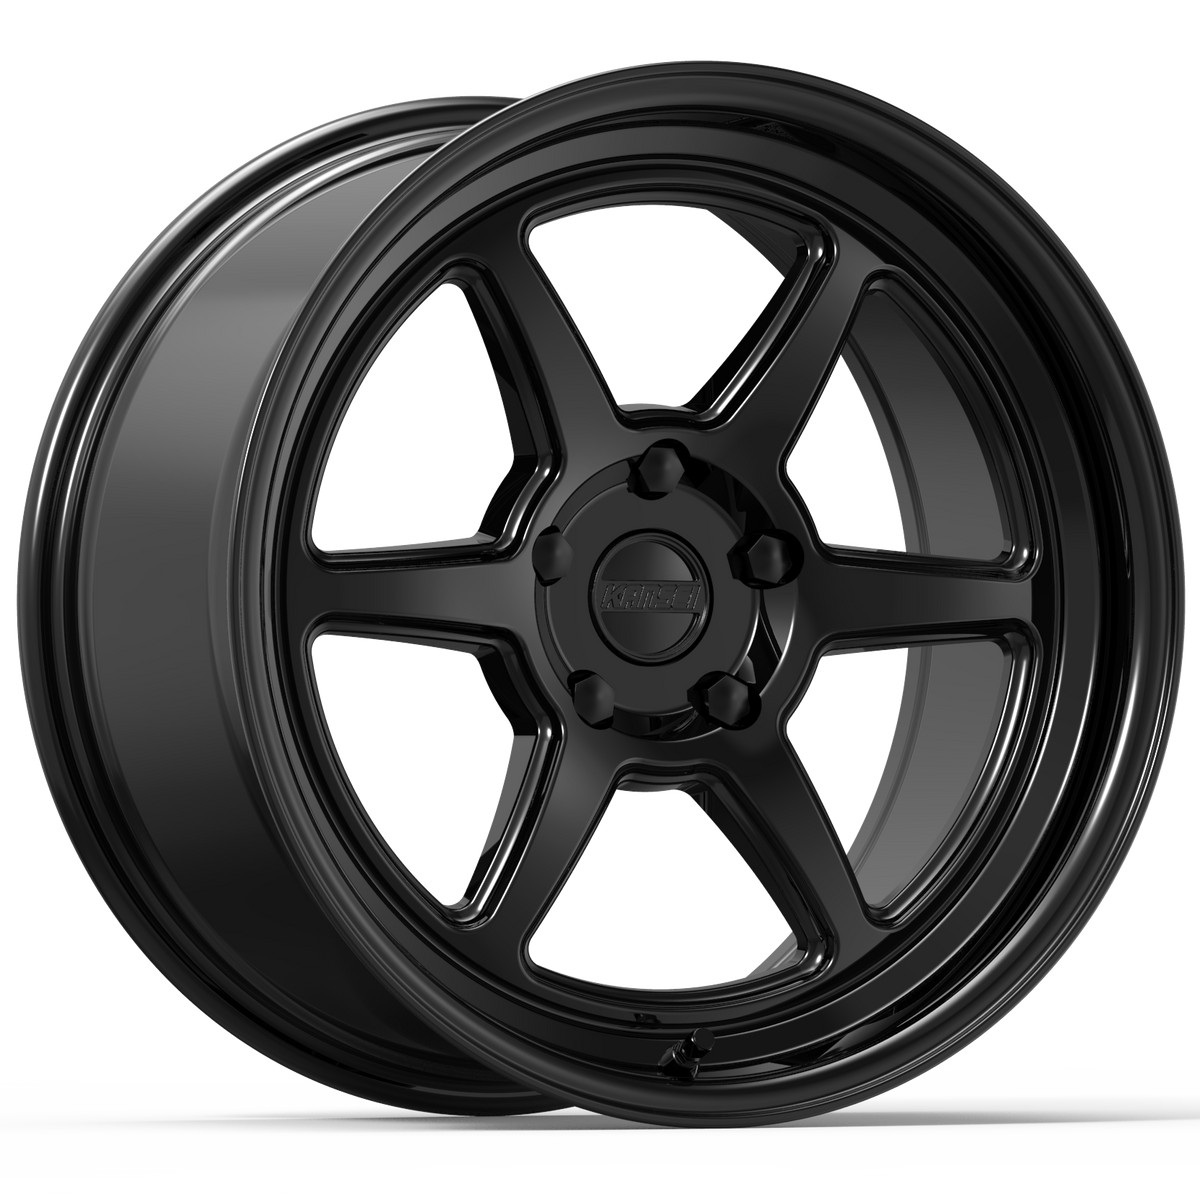 K14B ROKU Wheel, Size: 18" x 10.50", Bolt Pattern: 5 x 112 mm, Backspace: 6.22" [Finish: Gloss Black]